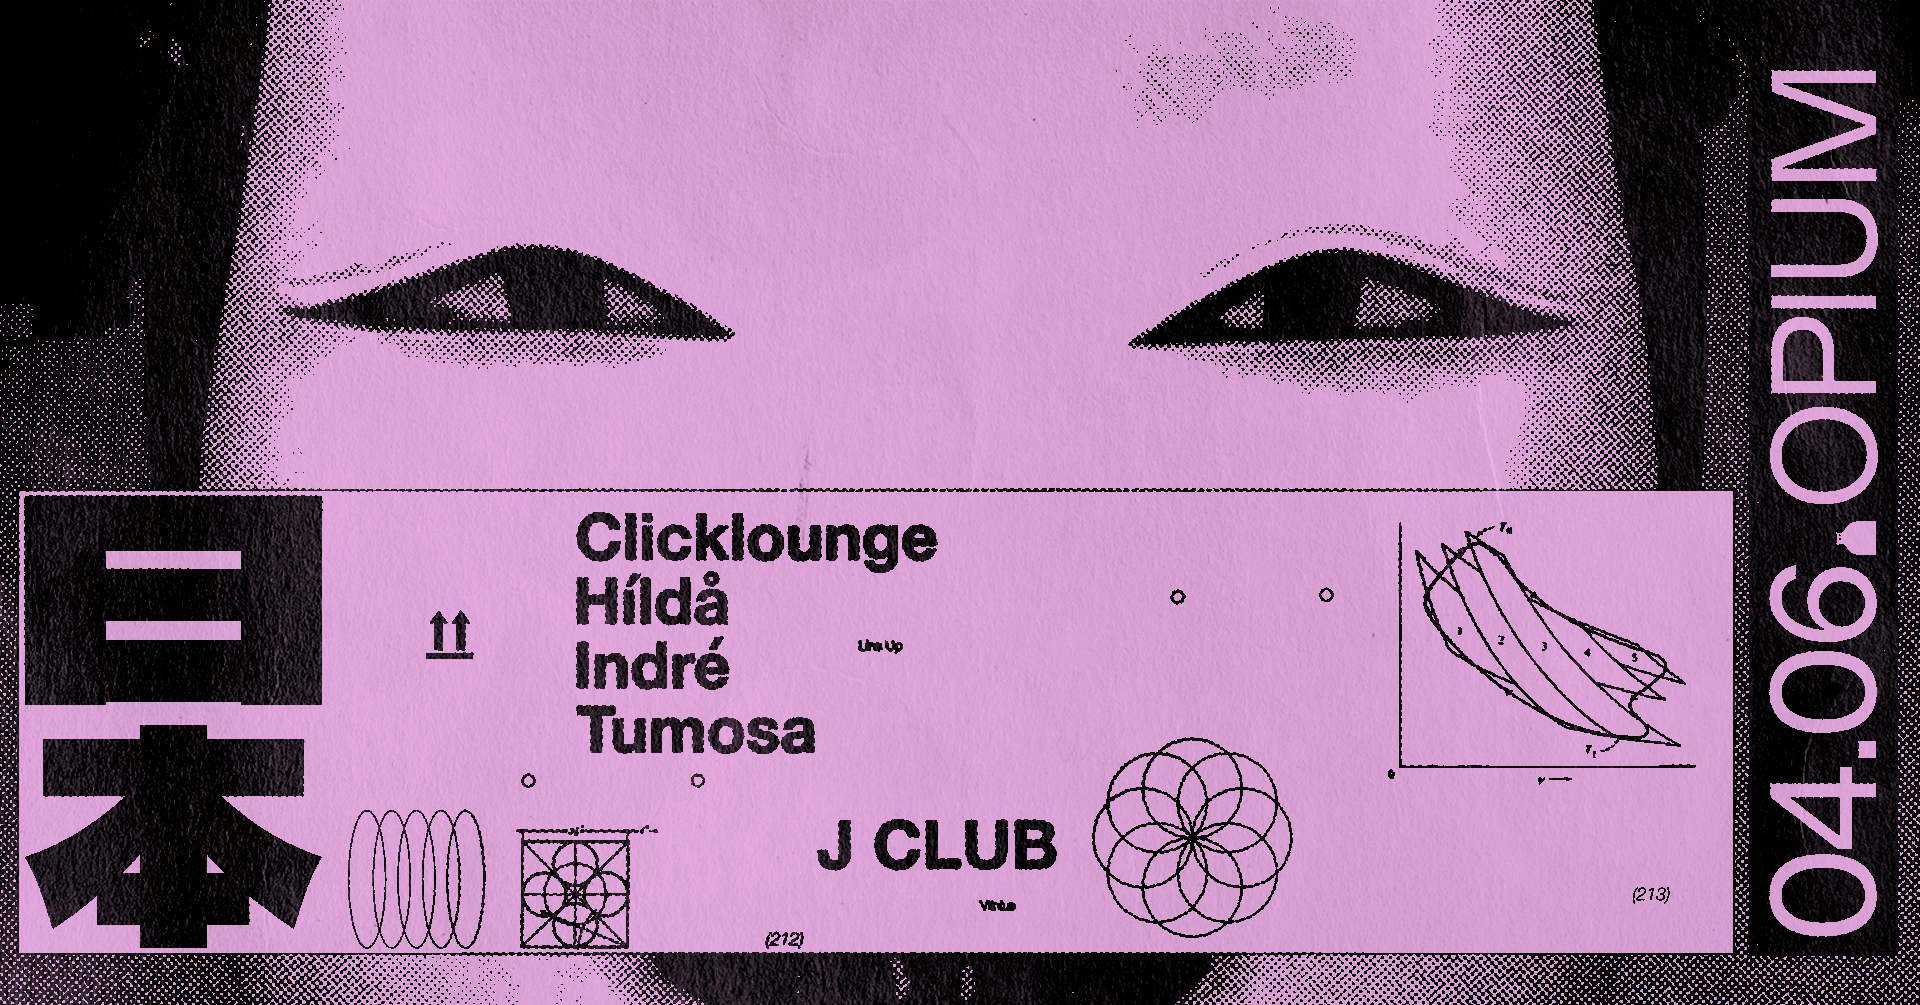 J CLUB: Clicklounge, Hìldå, Indré, Tumosa - フライヤー表